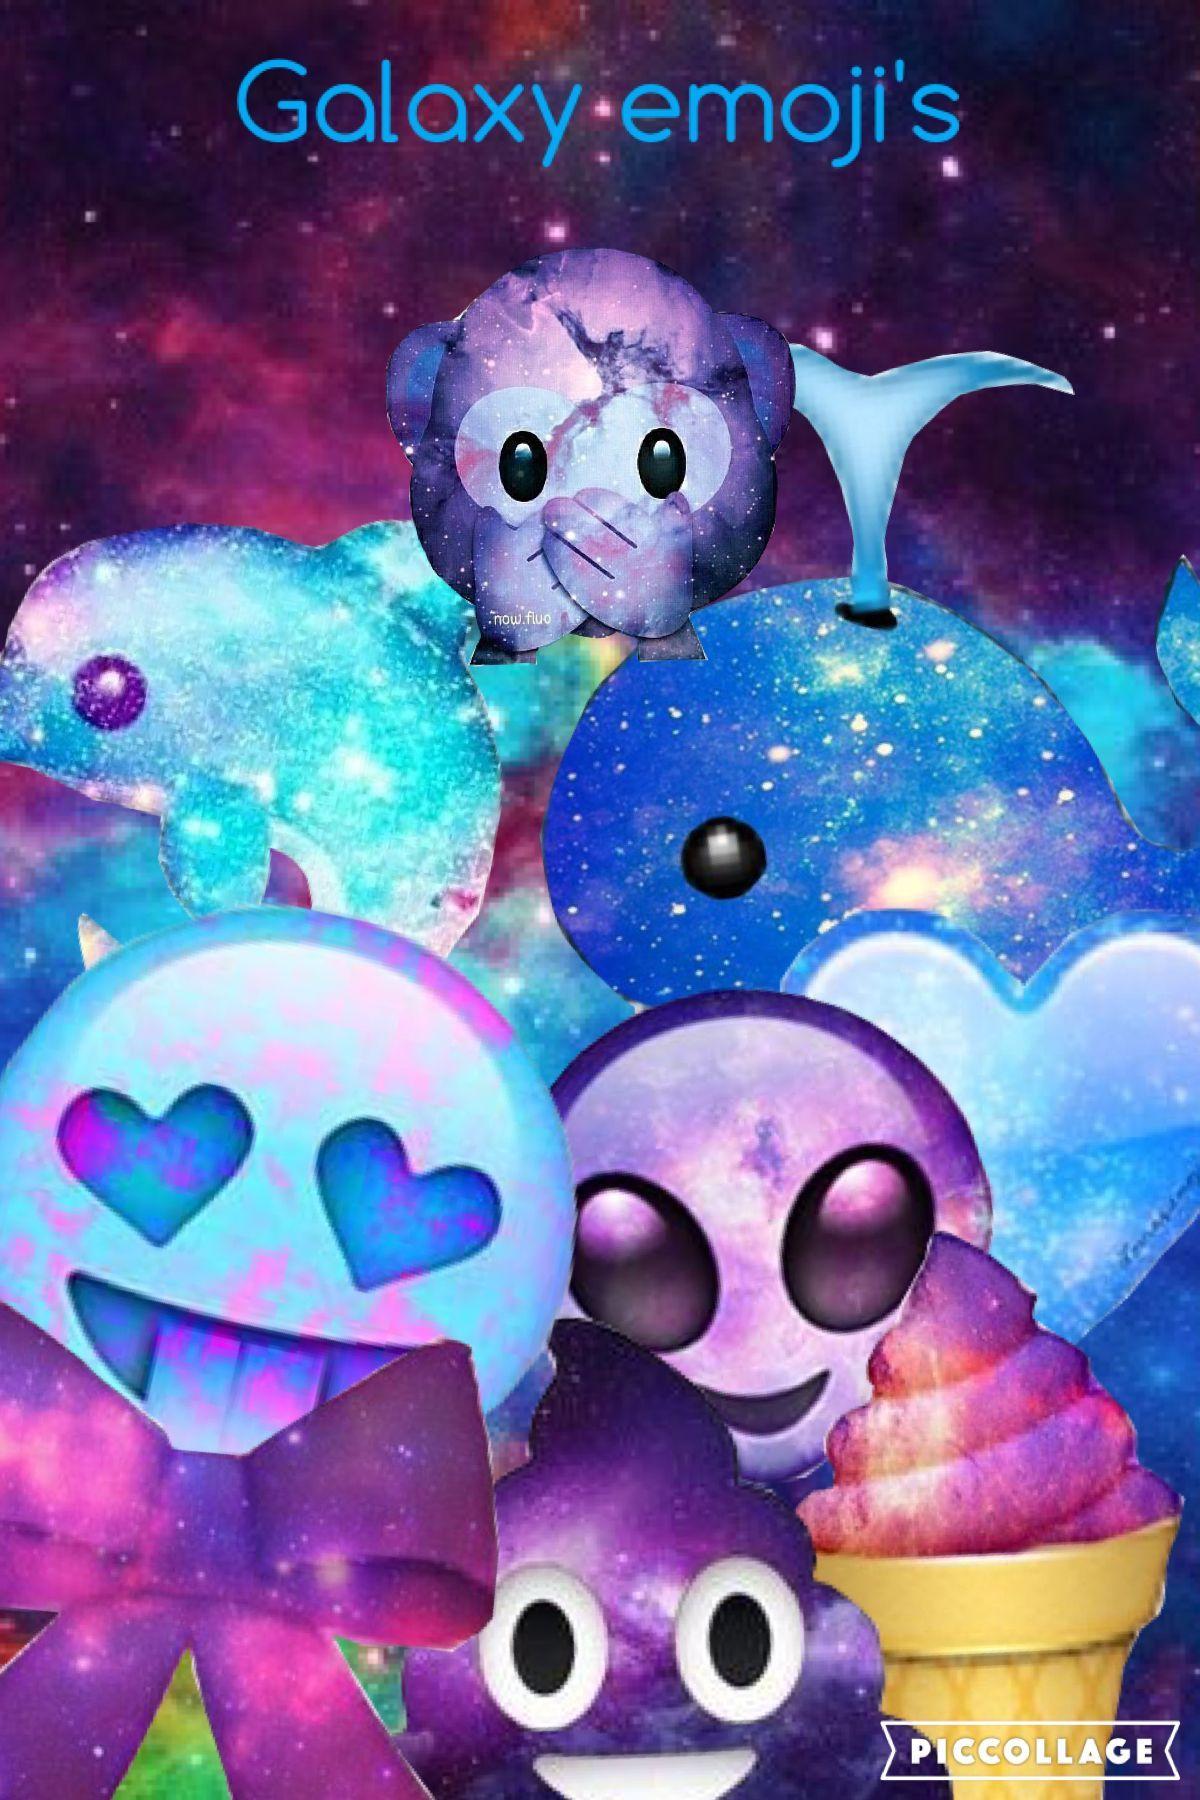 Galaxy Emojis Wallpapers - Top Free Galaxy Emojis Backgrounds ...